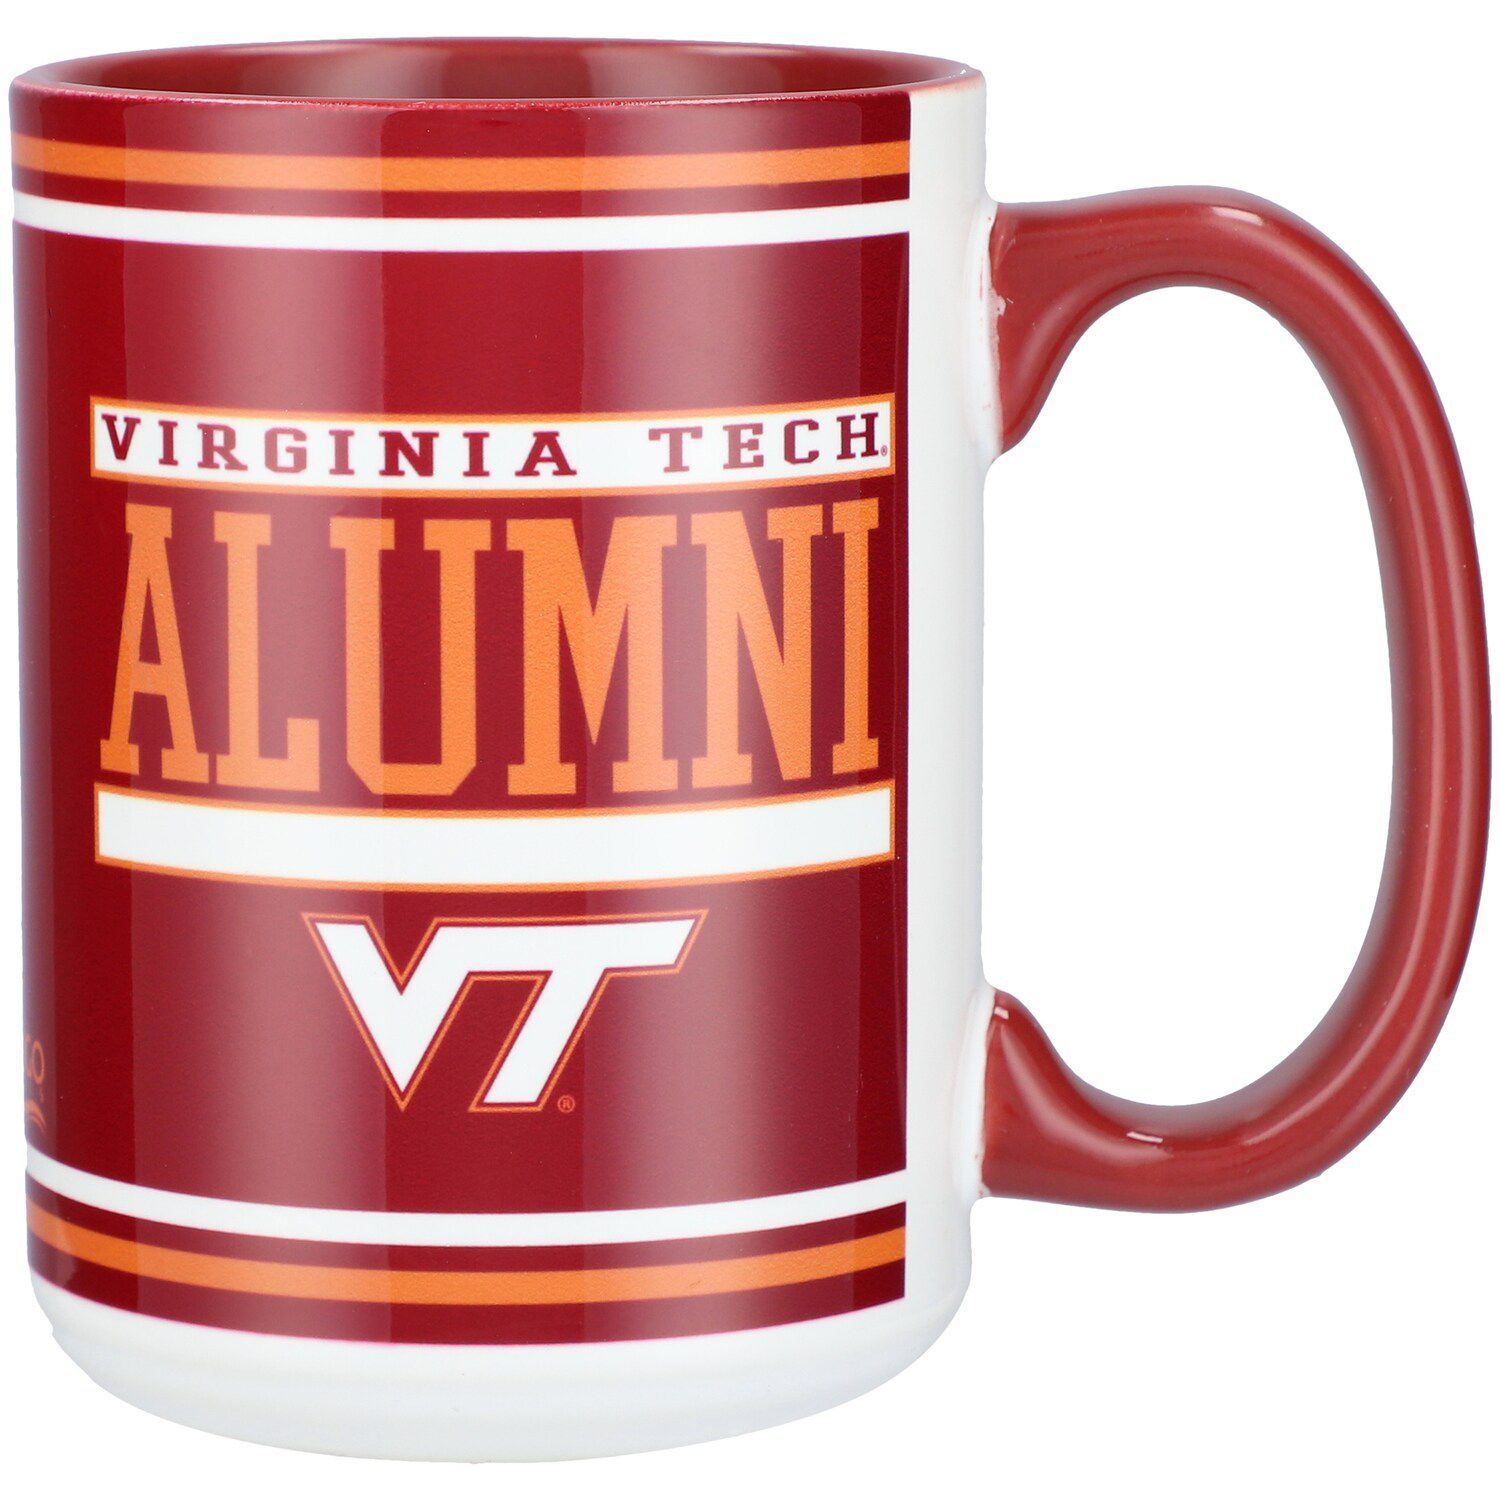 Alumni Travel Mug with a Handle